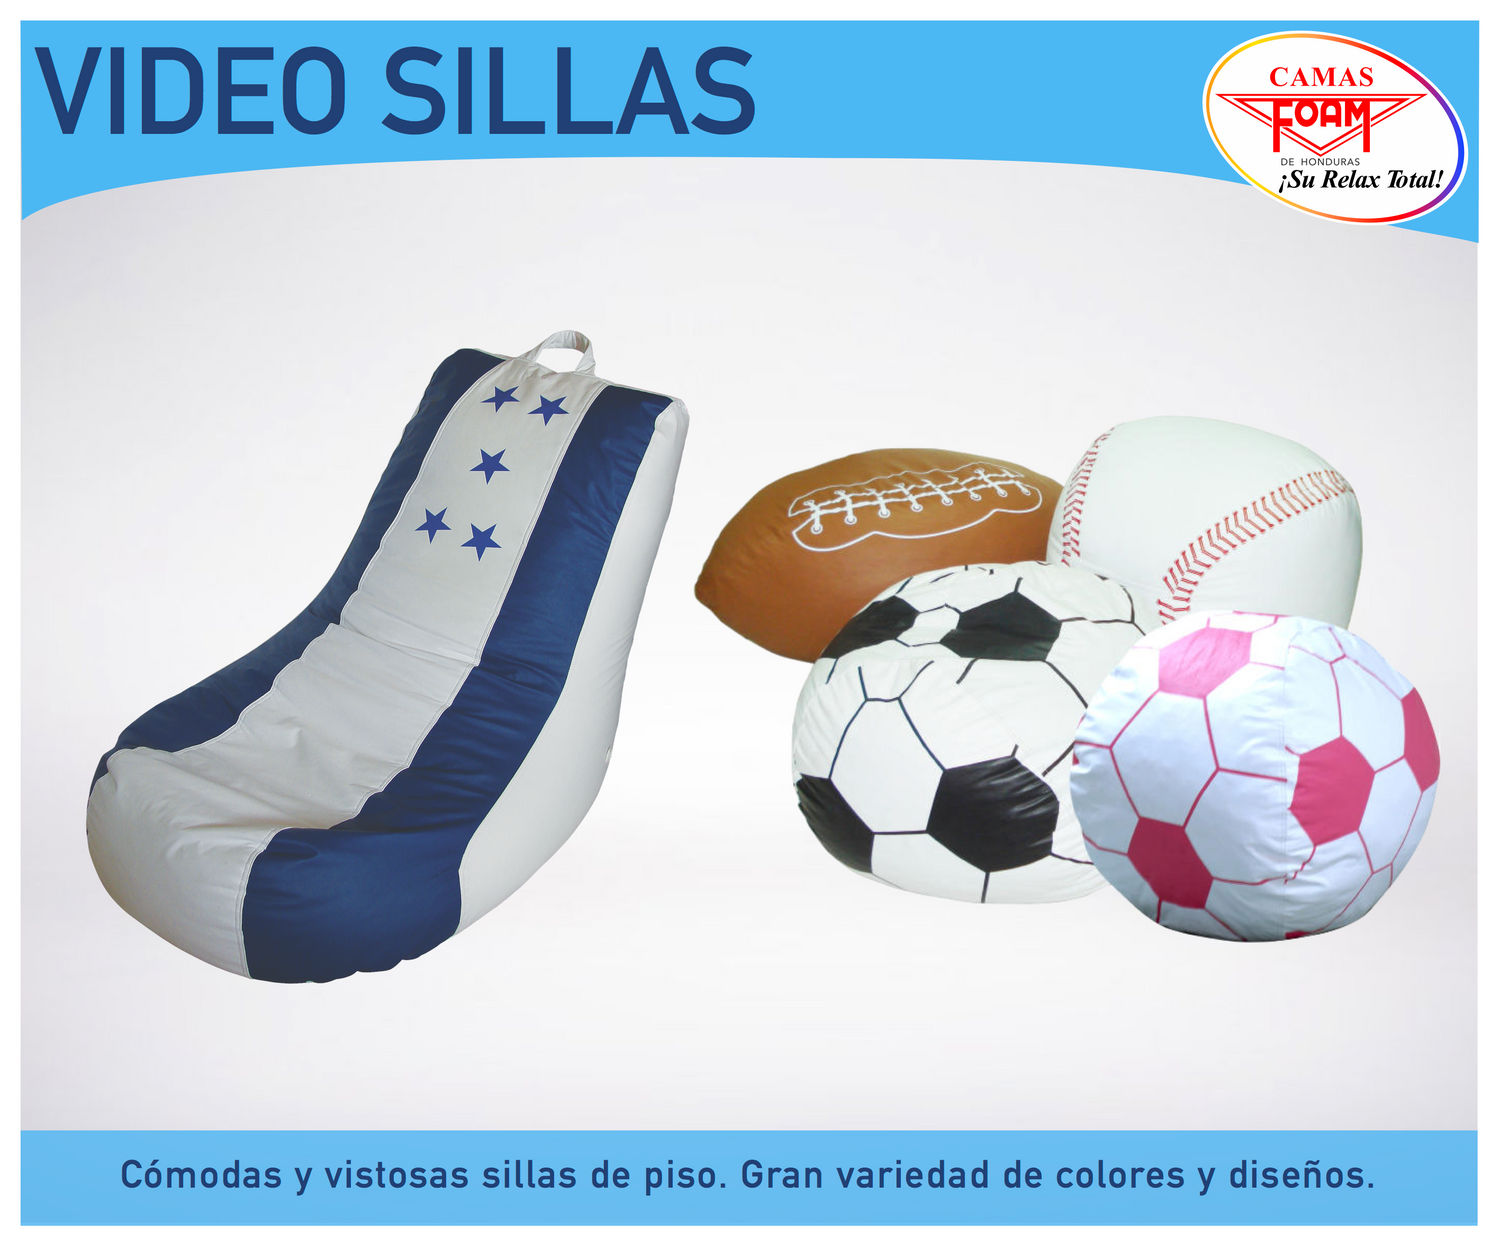 Video-Silla - Tiendas Relax